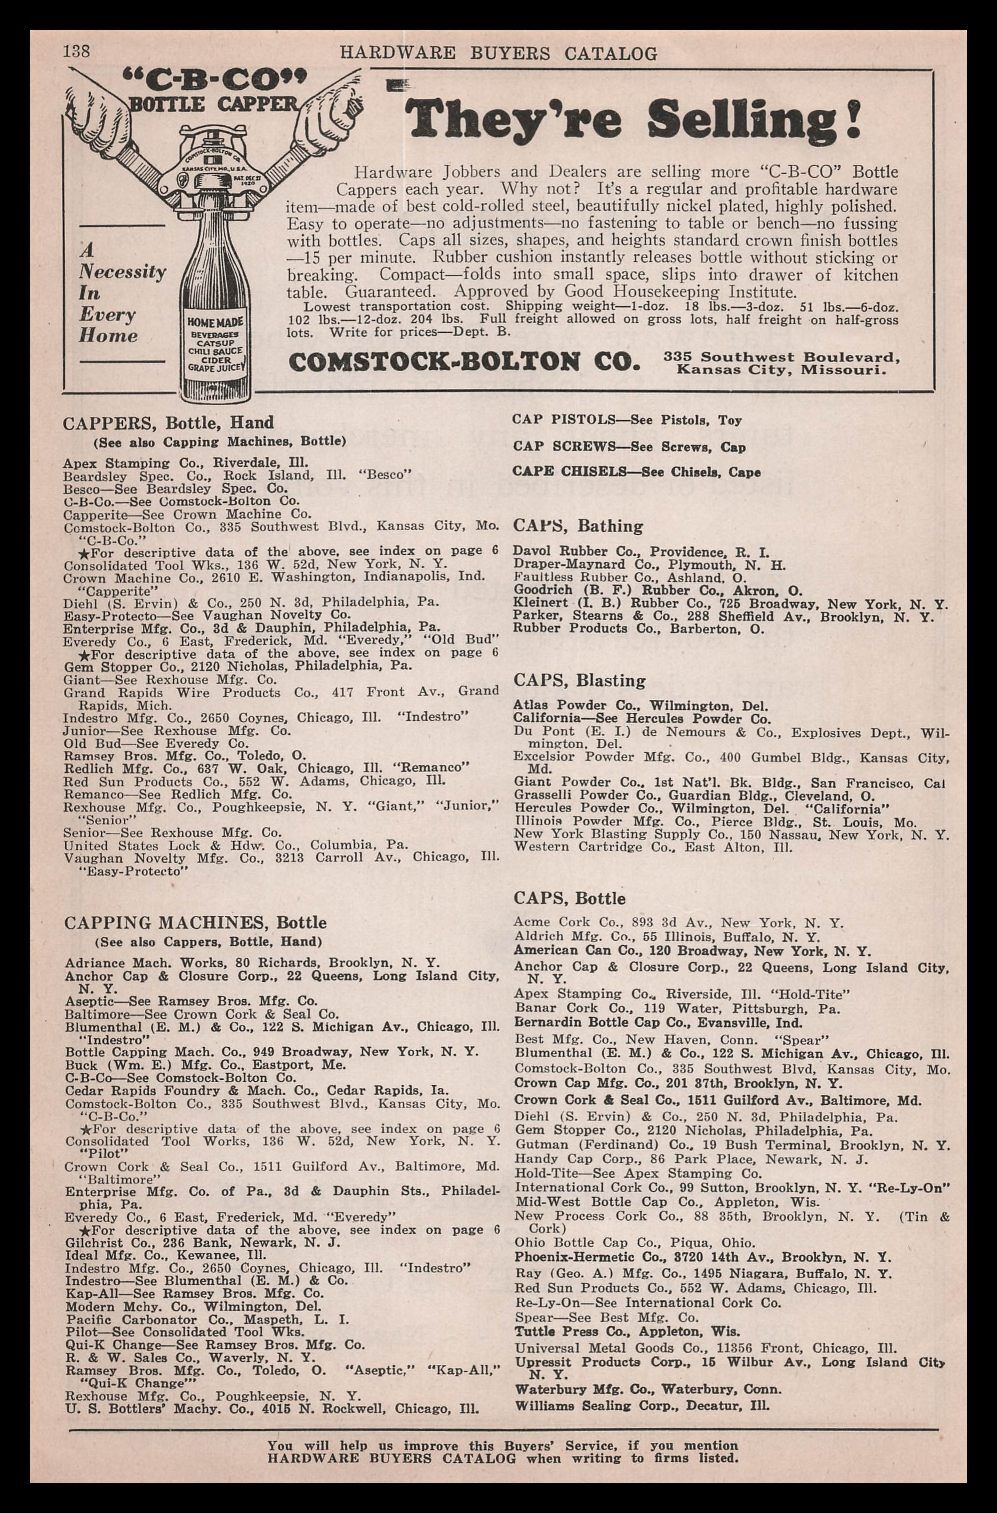 1928 Comstock Bolton Company Kansas City Missouri C-B-CO Bottle Cappers Print Ad